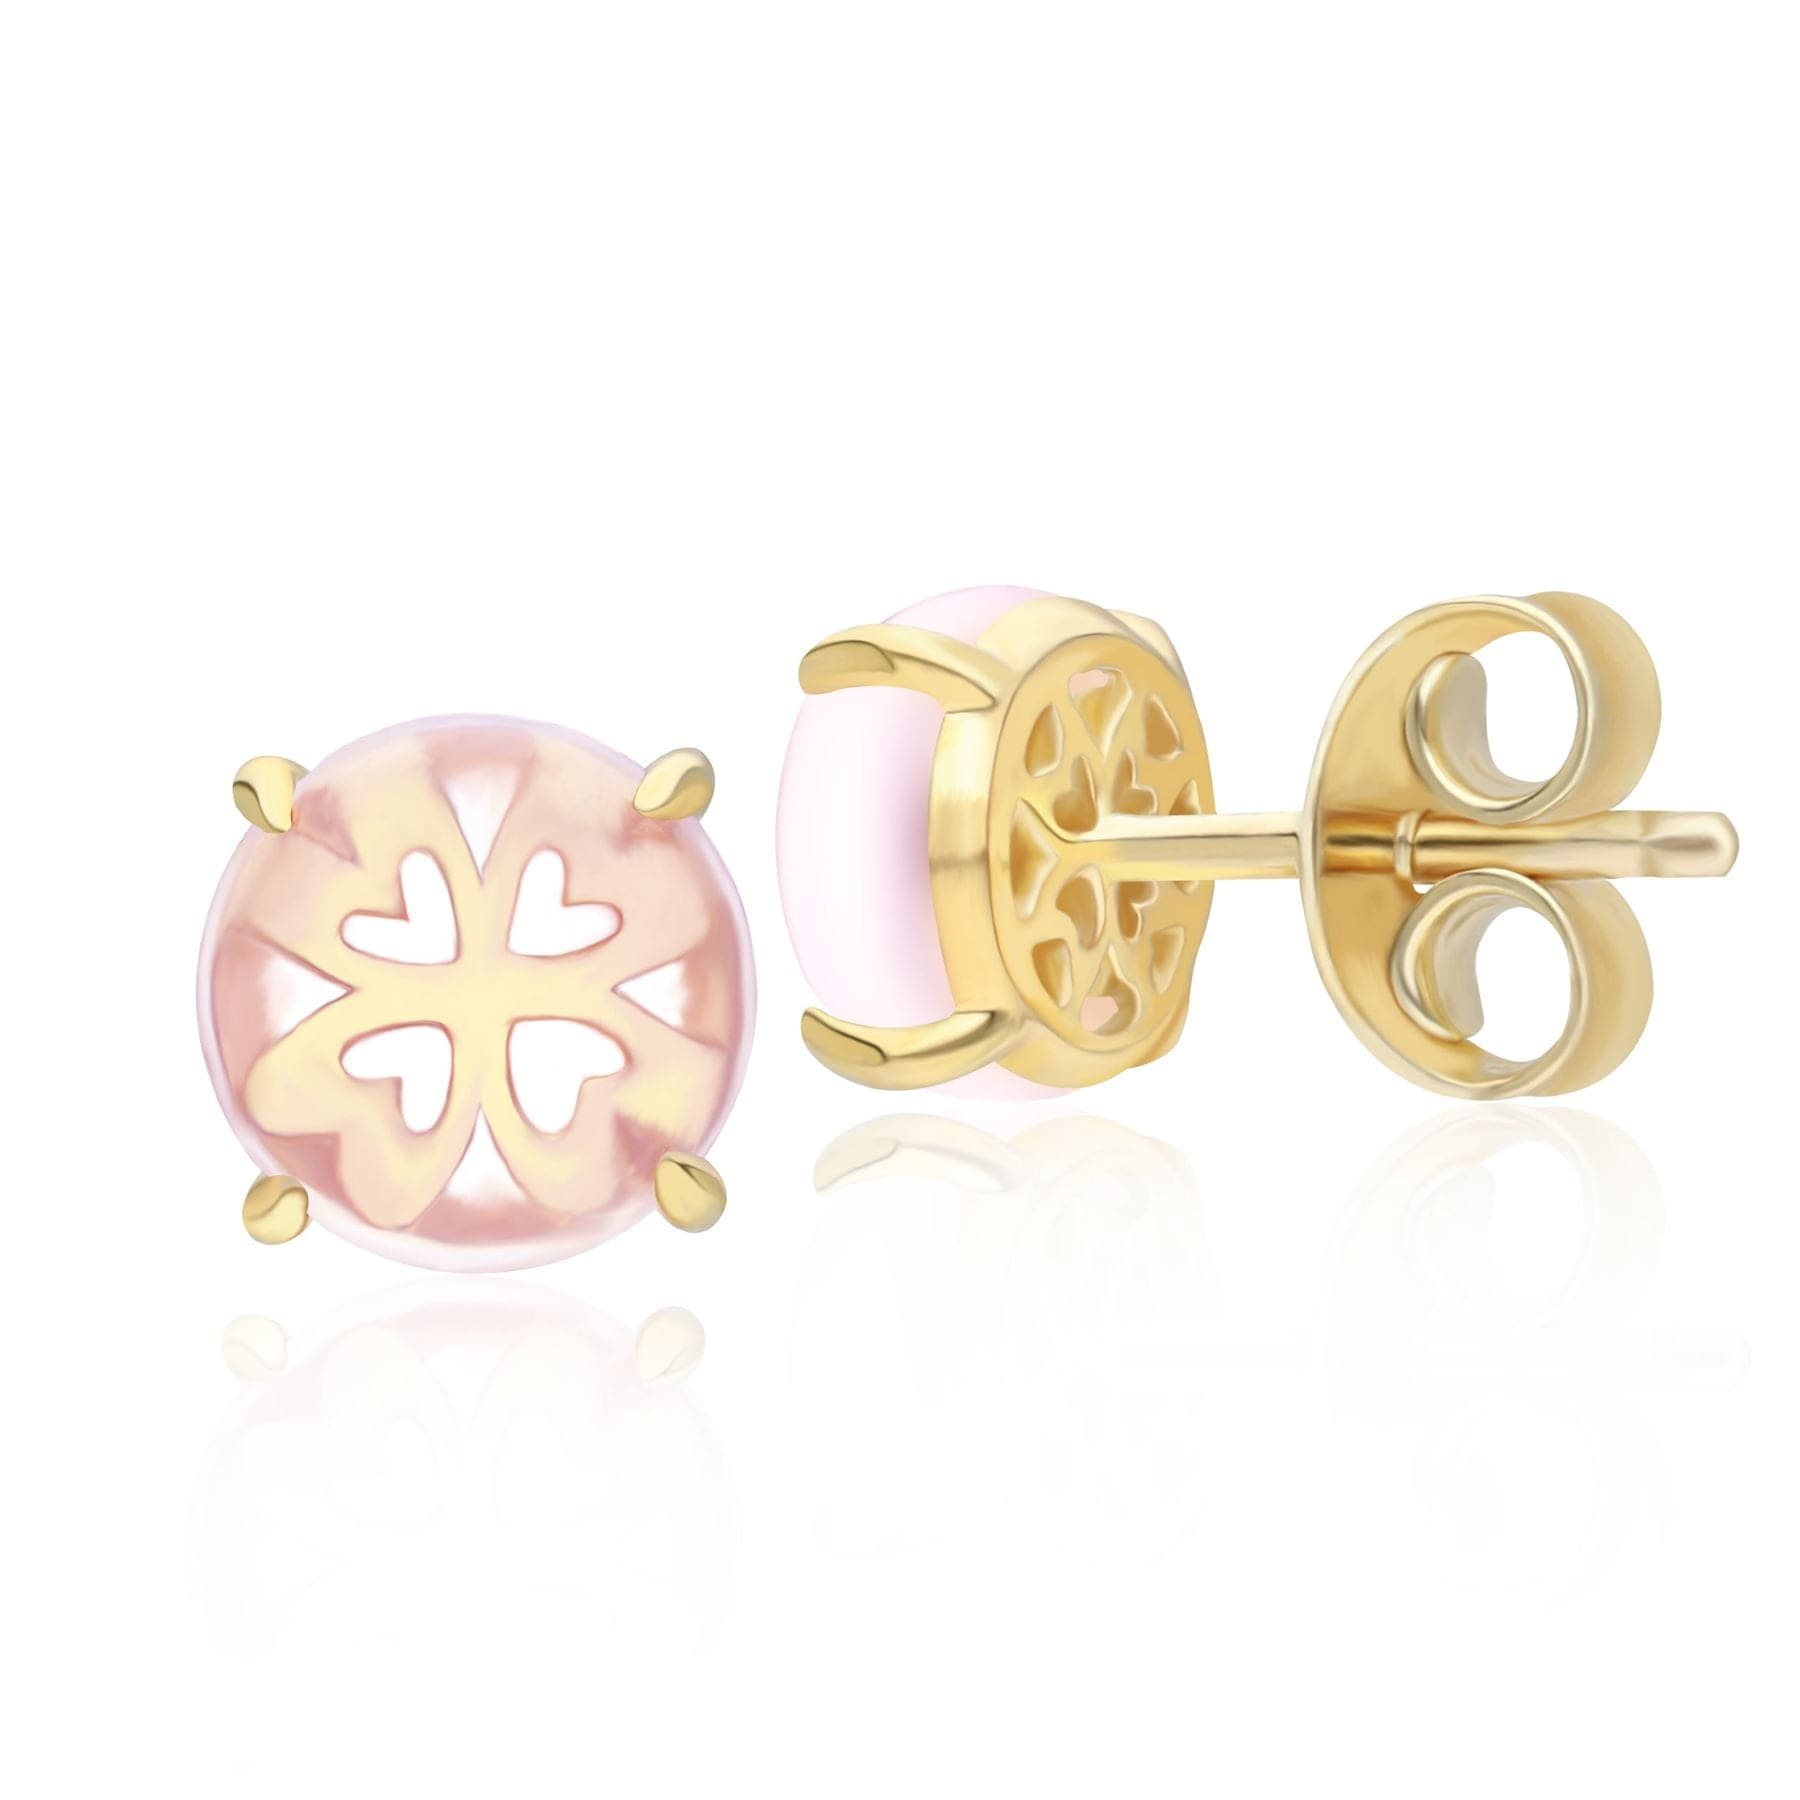 Gardenia Pink Amethyst Cabochon Stud Earrings in Gold Plated Sterling Silver - Gemondo